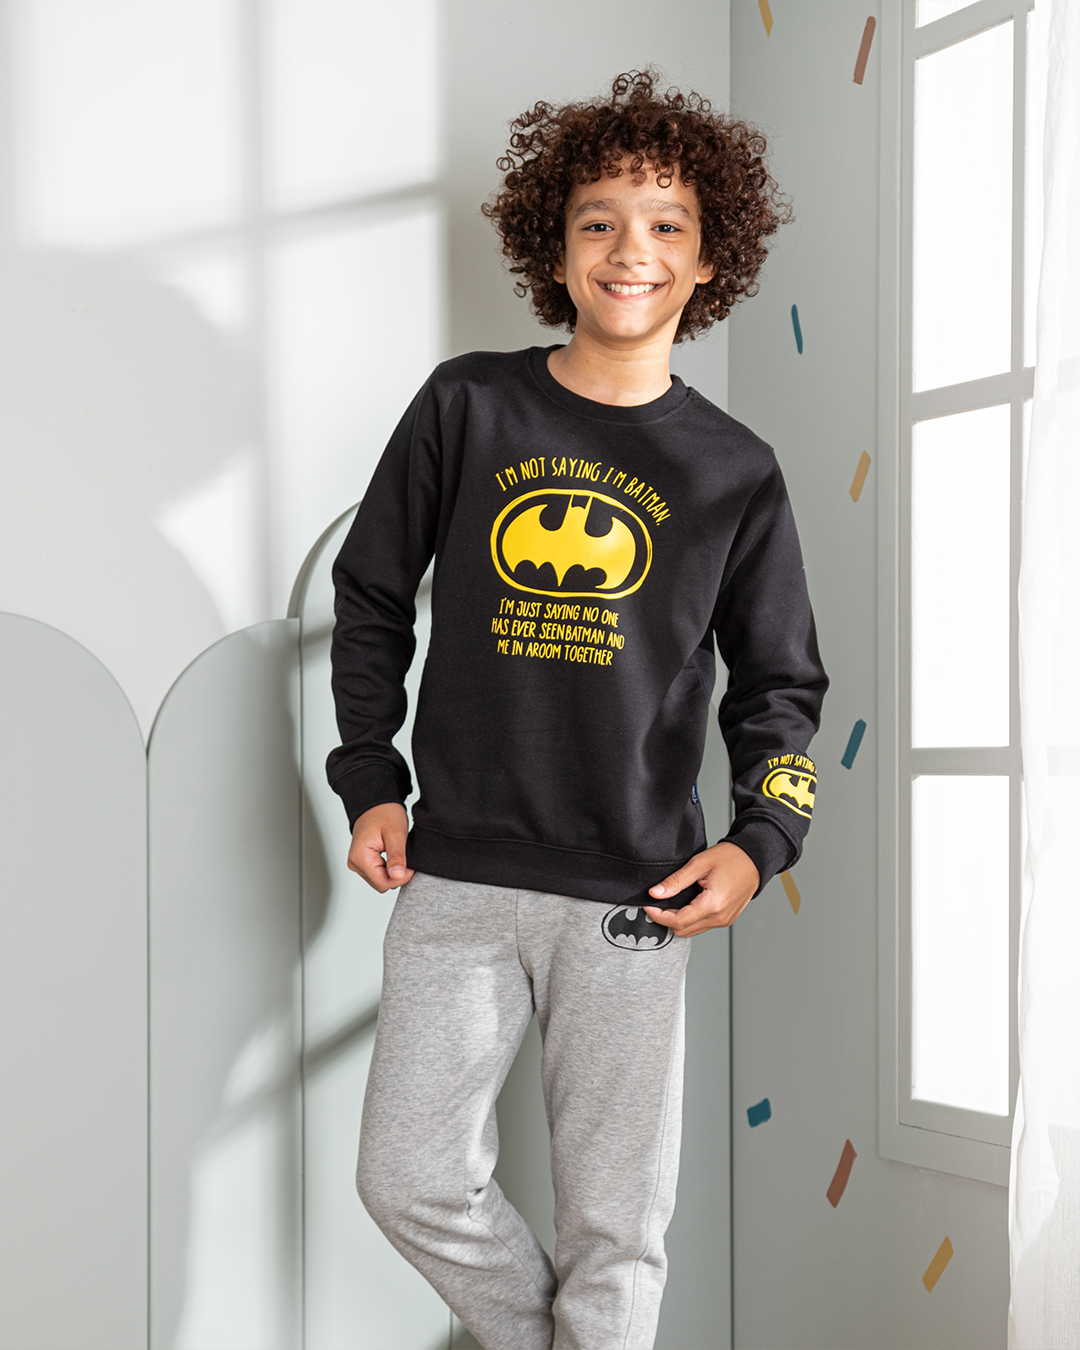 Batman pajamas for my boys, rhubarb